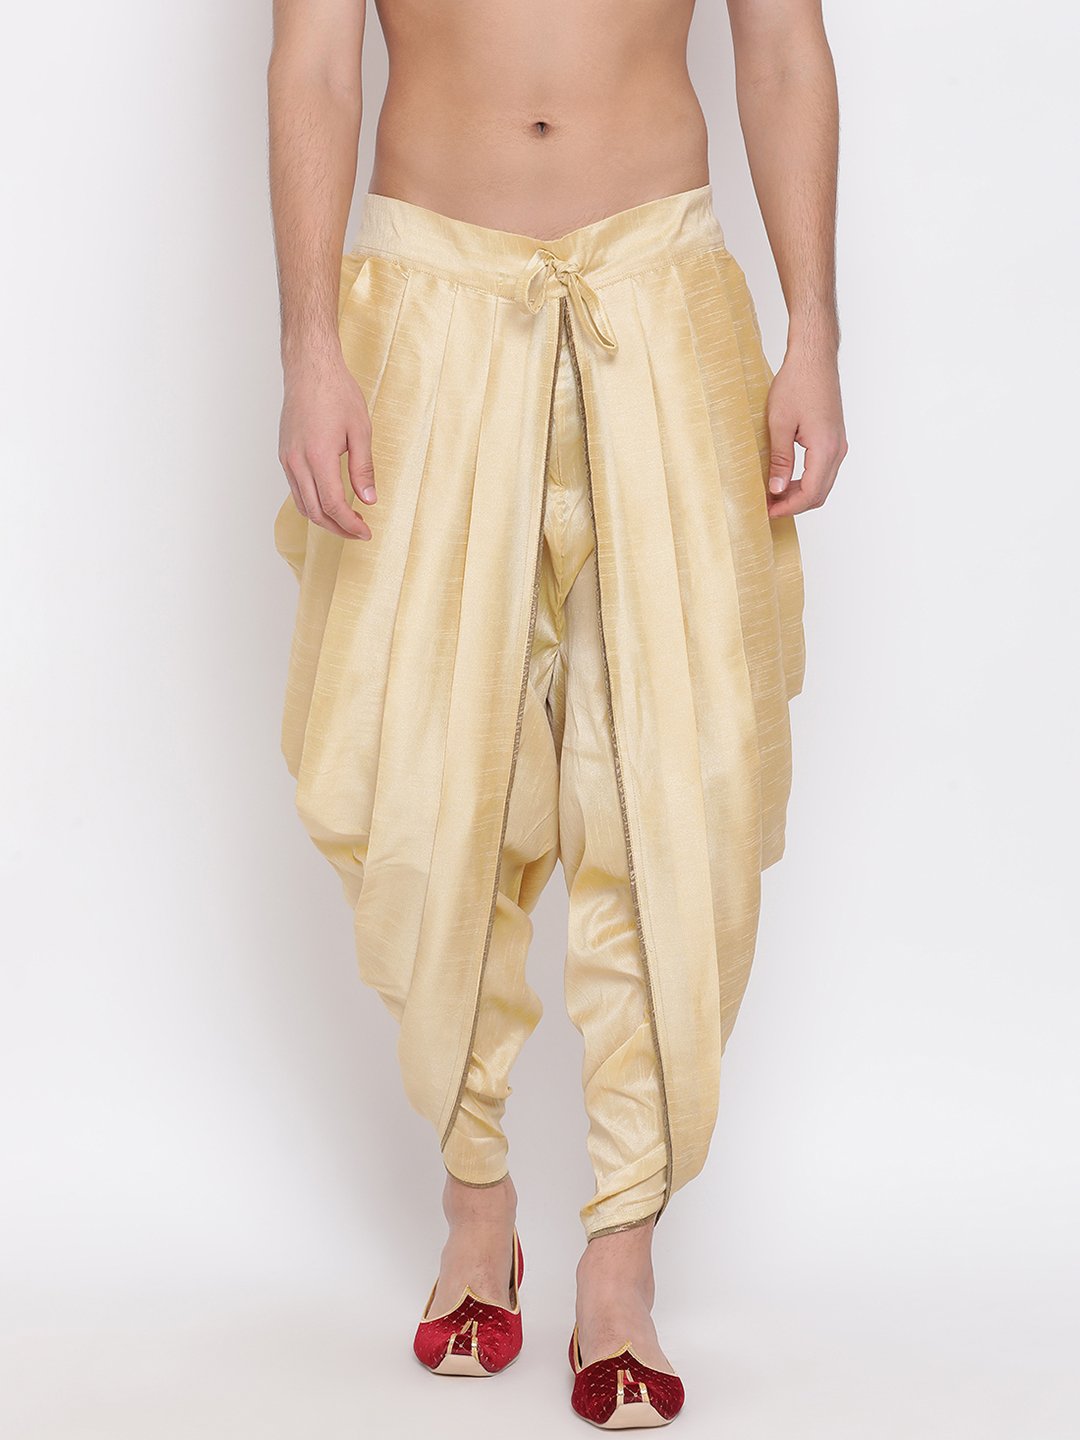 SAJKE Rayon Dhoti Pant for Women Ethnic Bottom Wear for Women's Regular Fit  Bottom Pants for Girls Harem Pants Amber Yellow : Amazon.in: Fashion